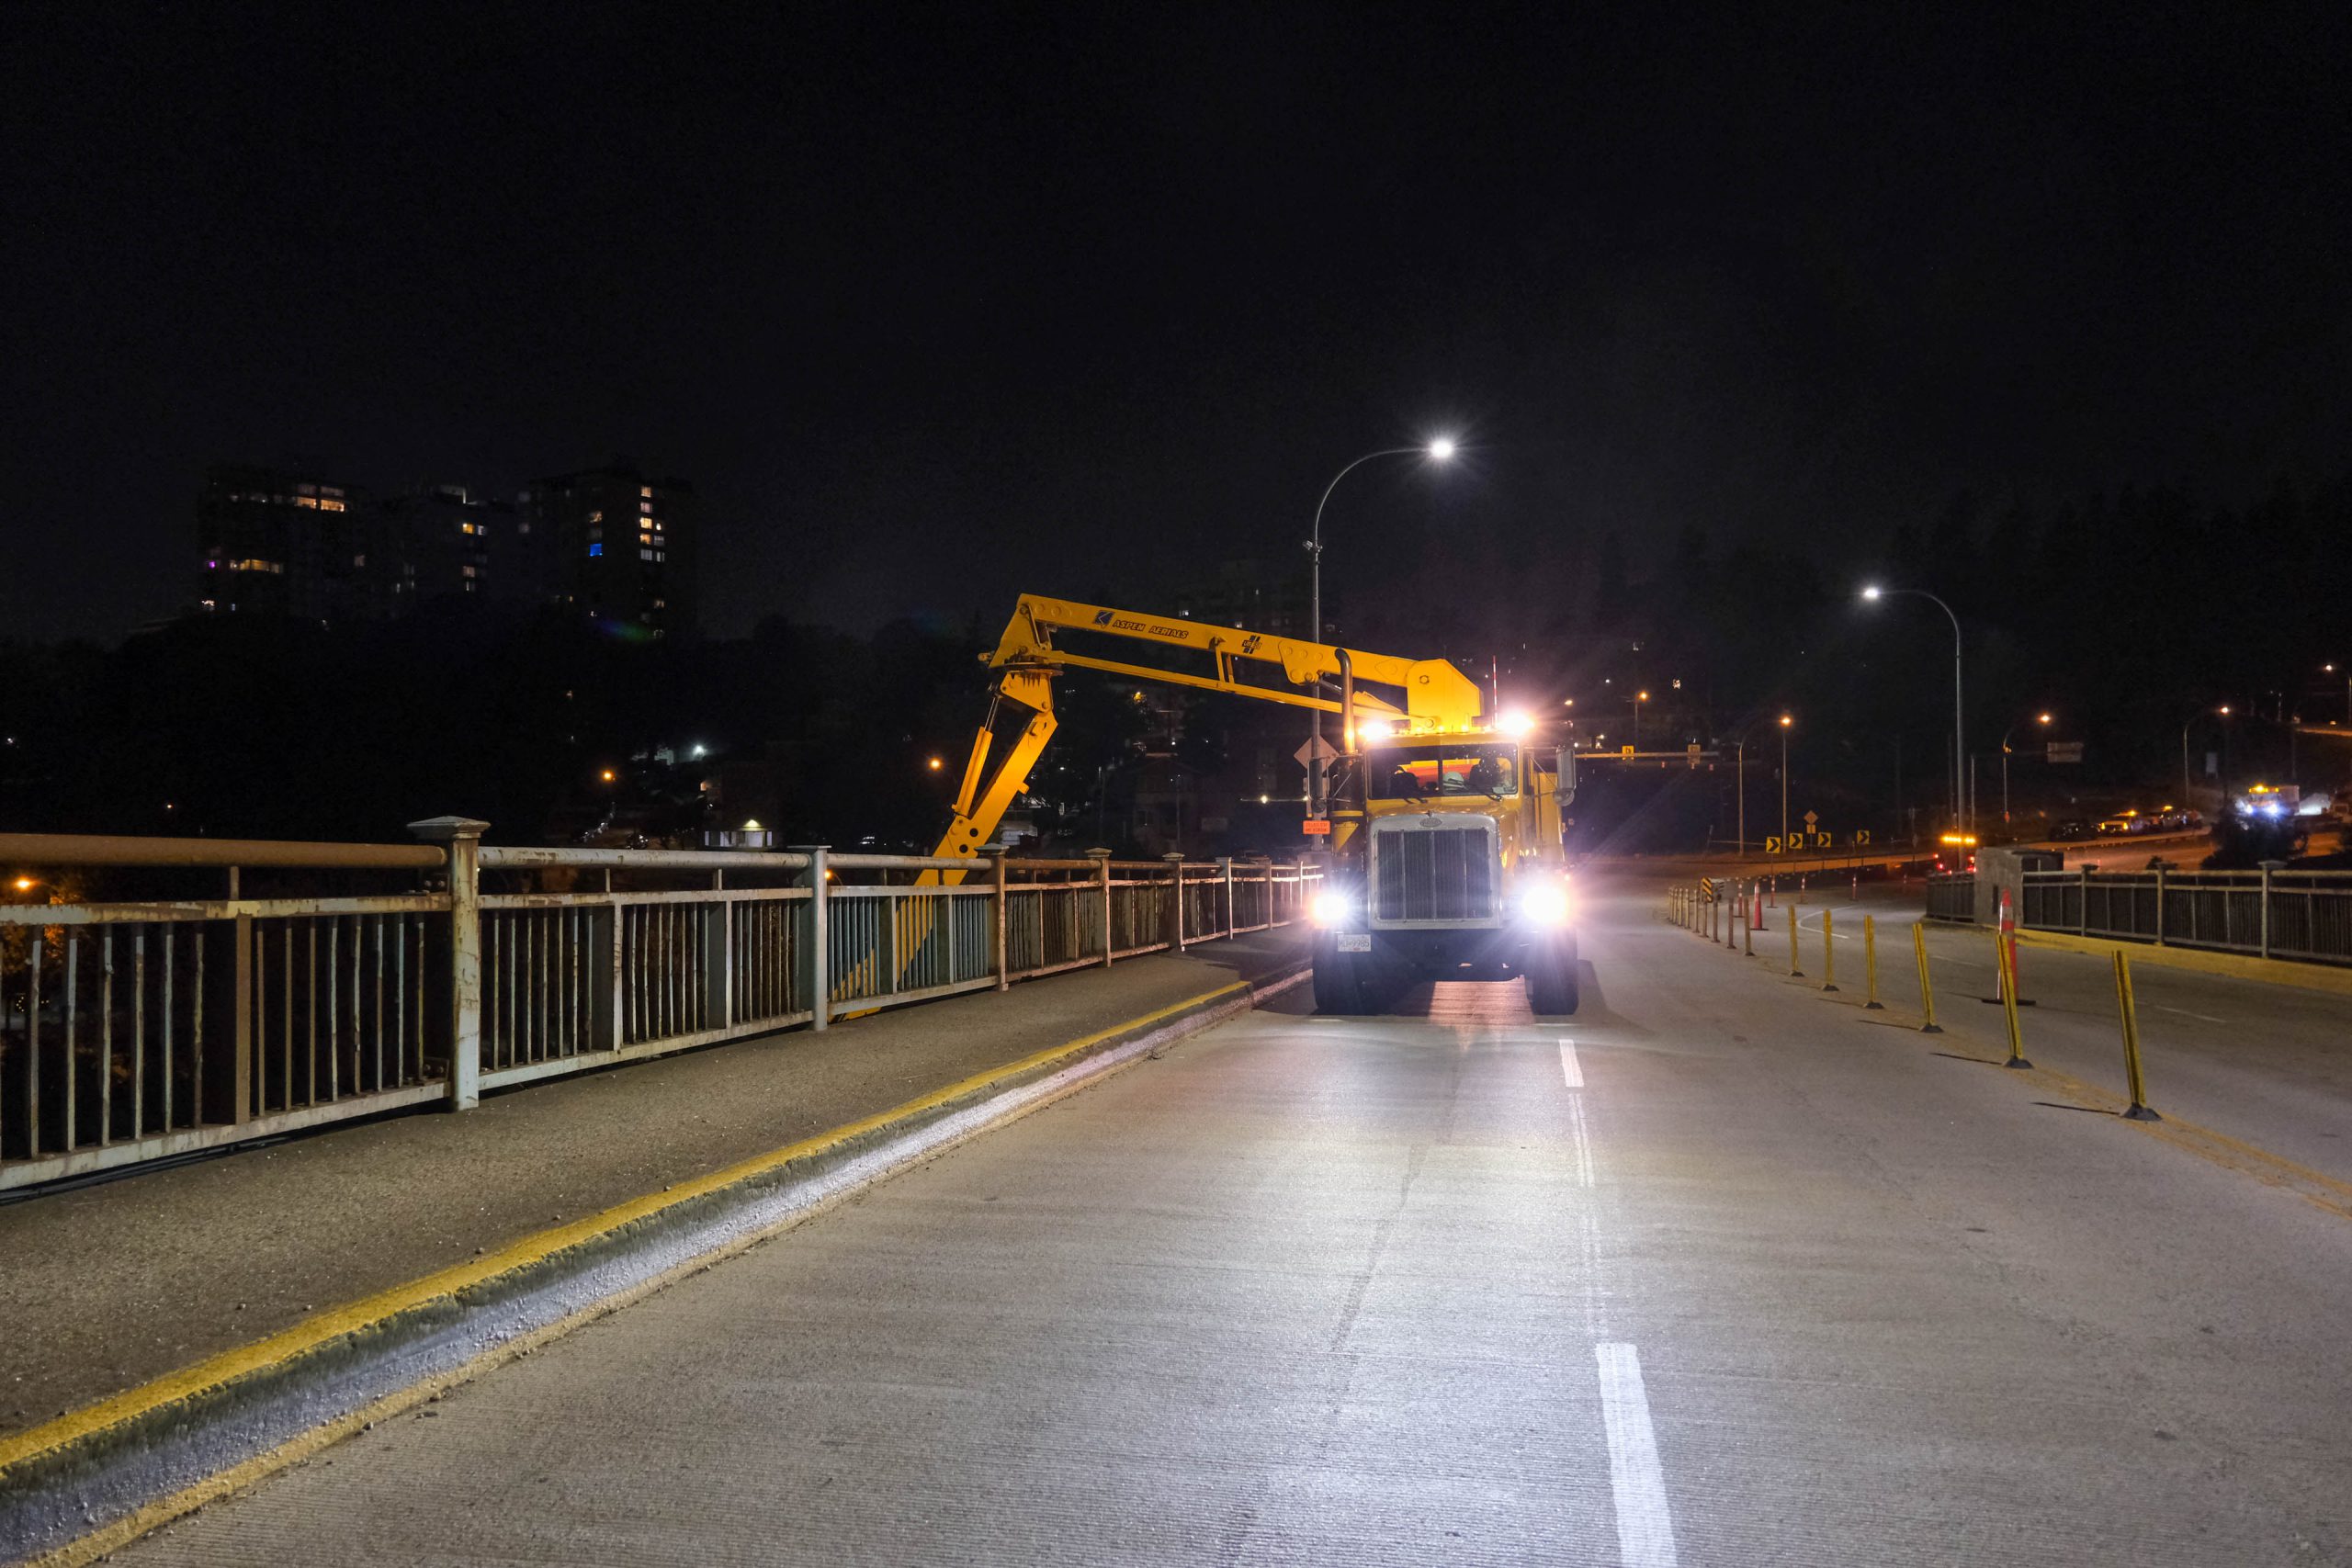 The snooper truck operating on the deck of the Pattullo Bridge at night.